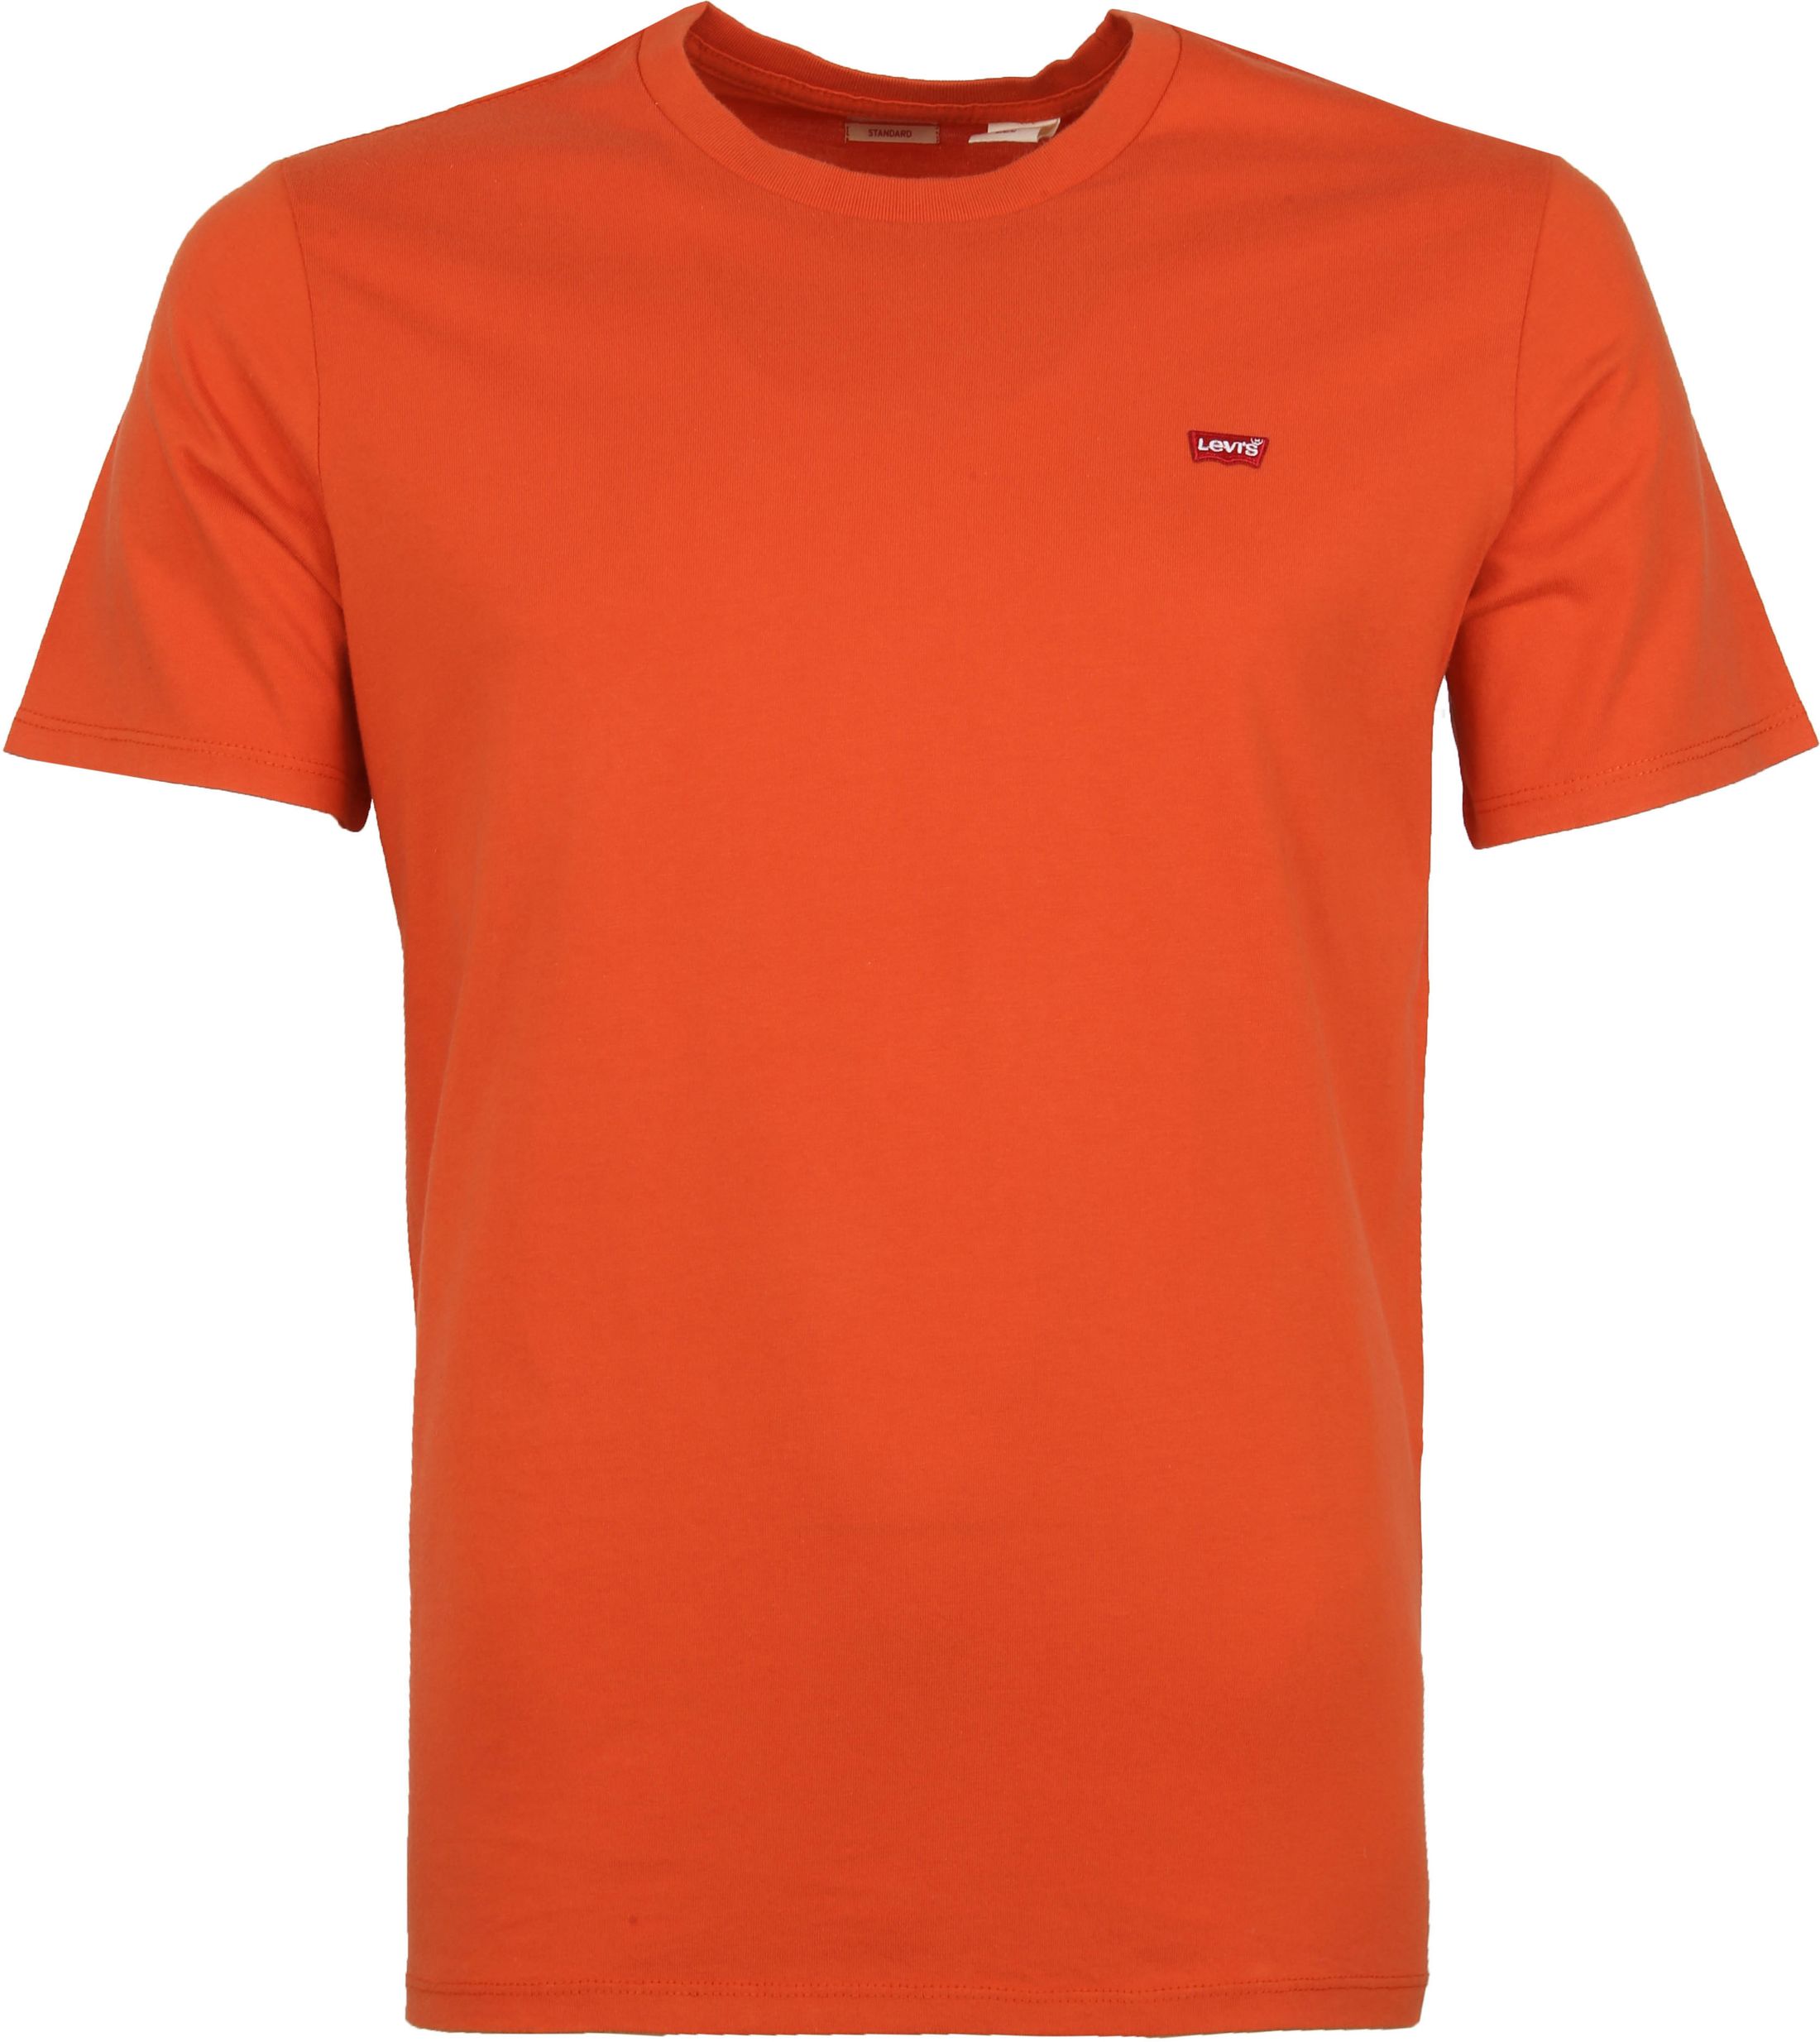 Levi's T Shirt Original Red Orange size L